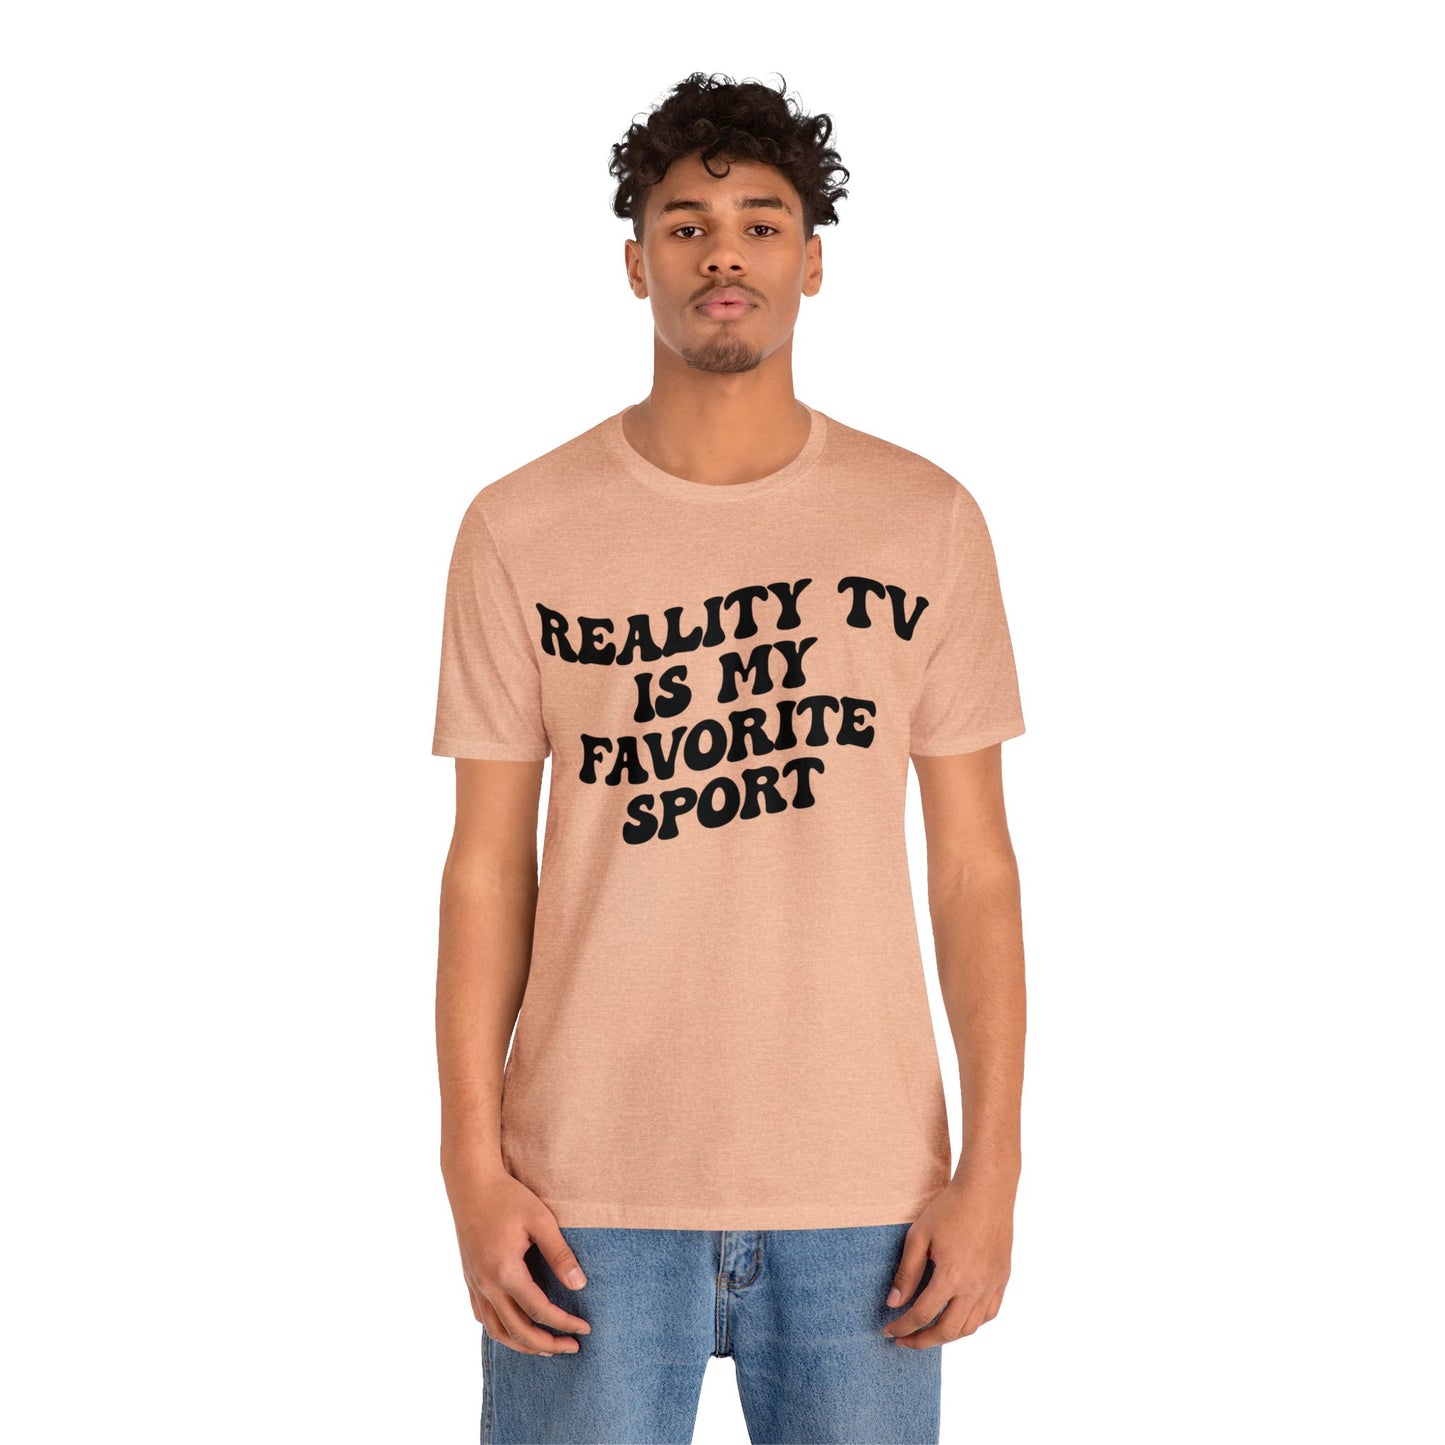 Reality TV Is My Favorite Sport Shirt, Bachelor Fan Shirt, Funny Shirt for Mom, Reality Television Fan Shirt, Shirt for Women, T1503